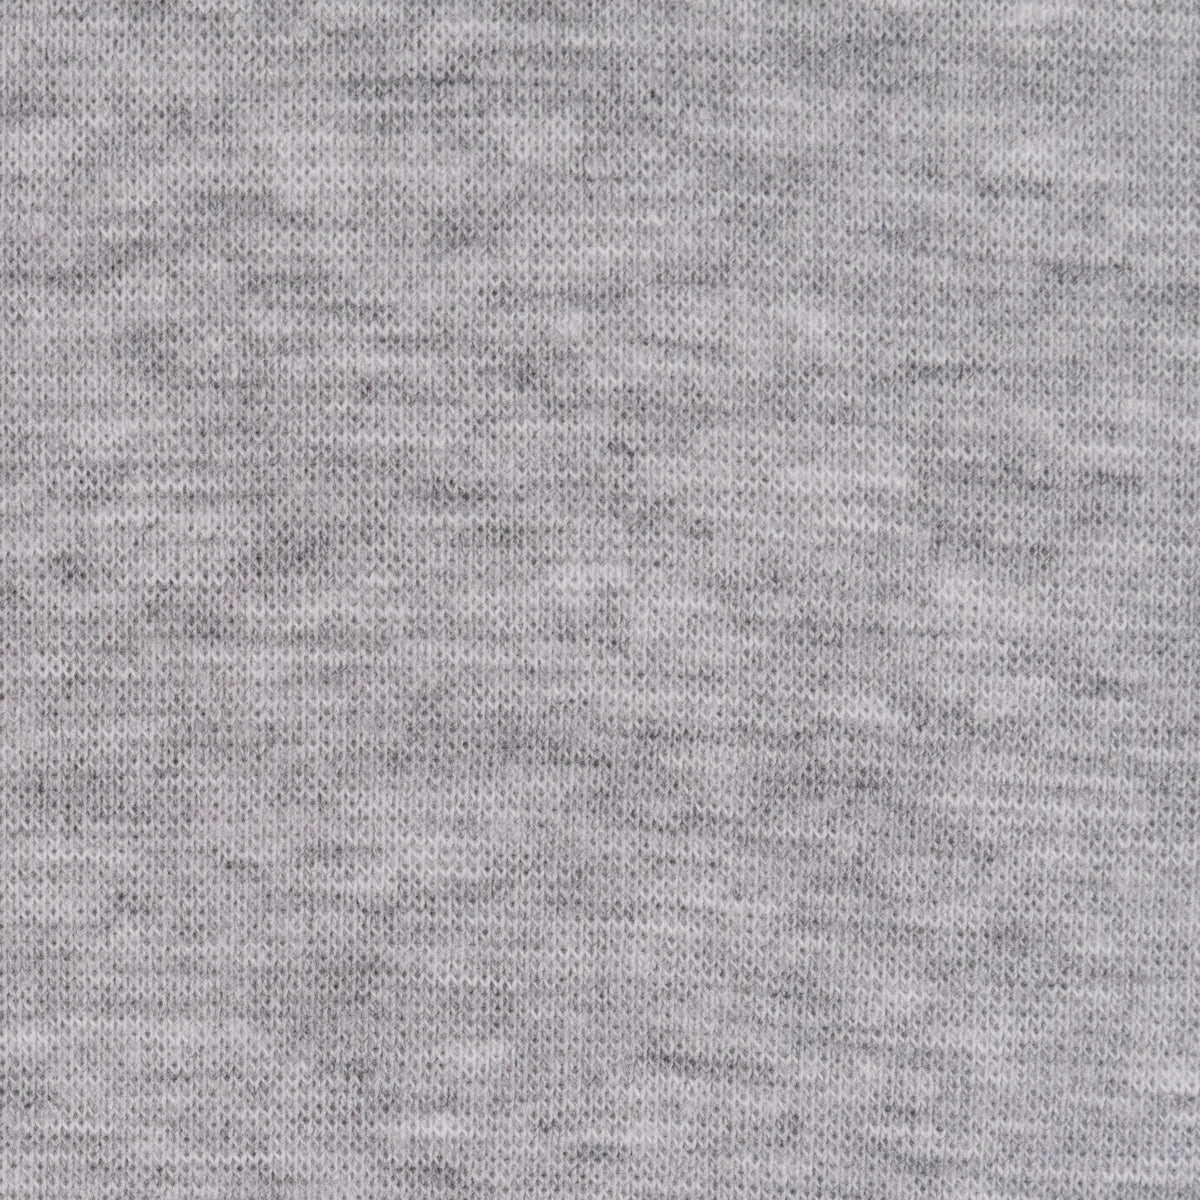 Ribbing Fabric for Sweatshirts, Jersey Fabric, Cuff Fabric. - China Rib  Fabric and Cufff Fabric price